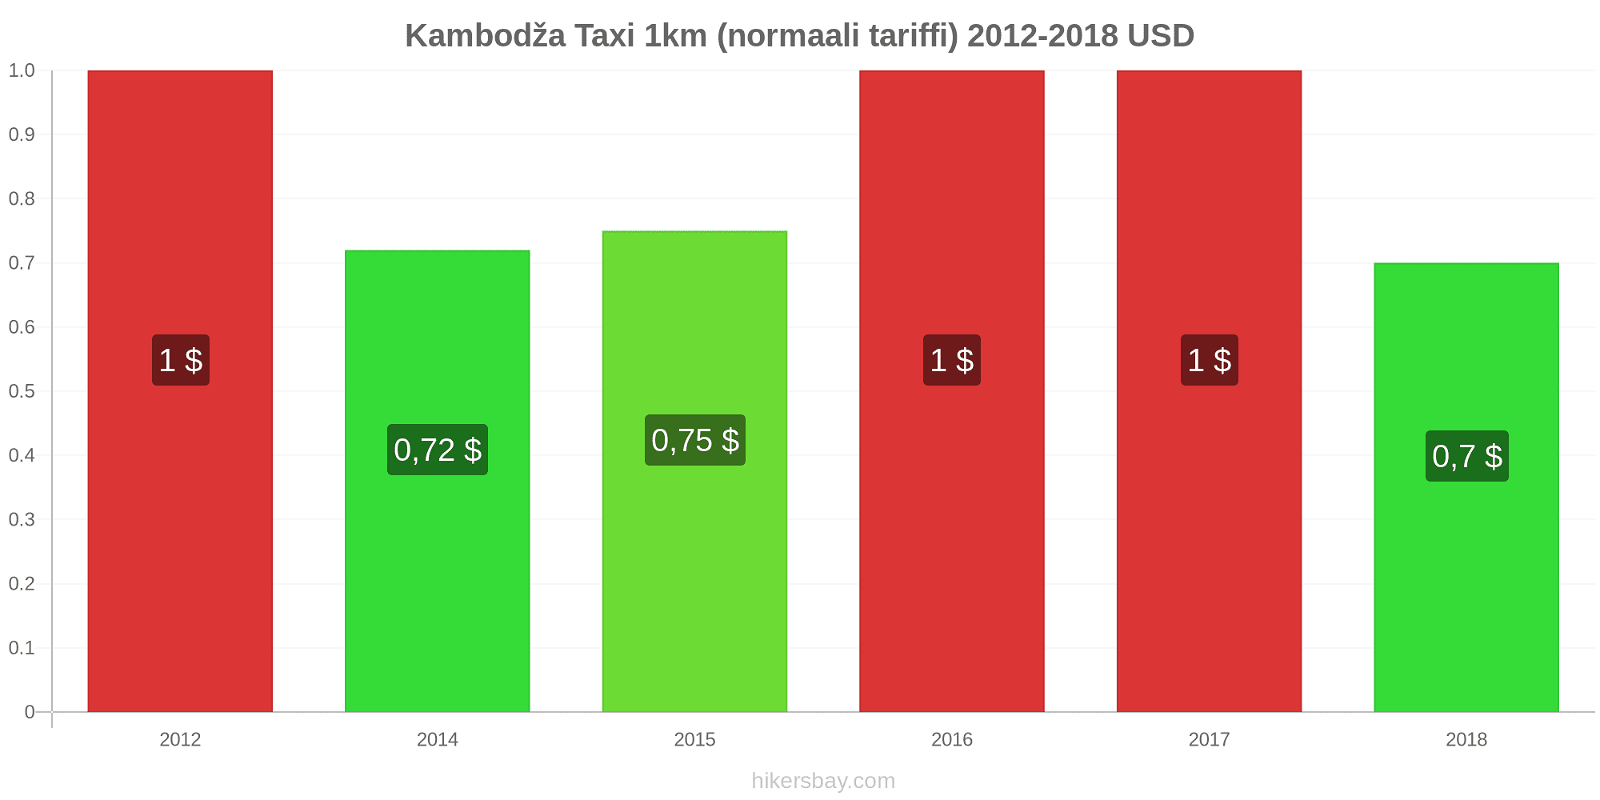 Kambodža hintojen muutokset Taxi 1km (normaali tariffi) hikersbay.com